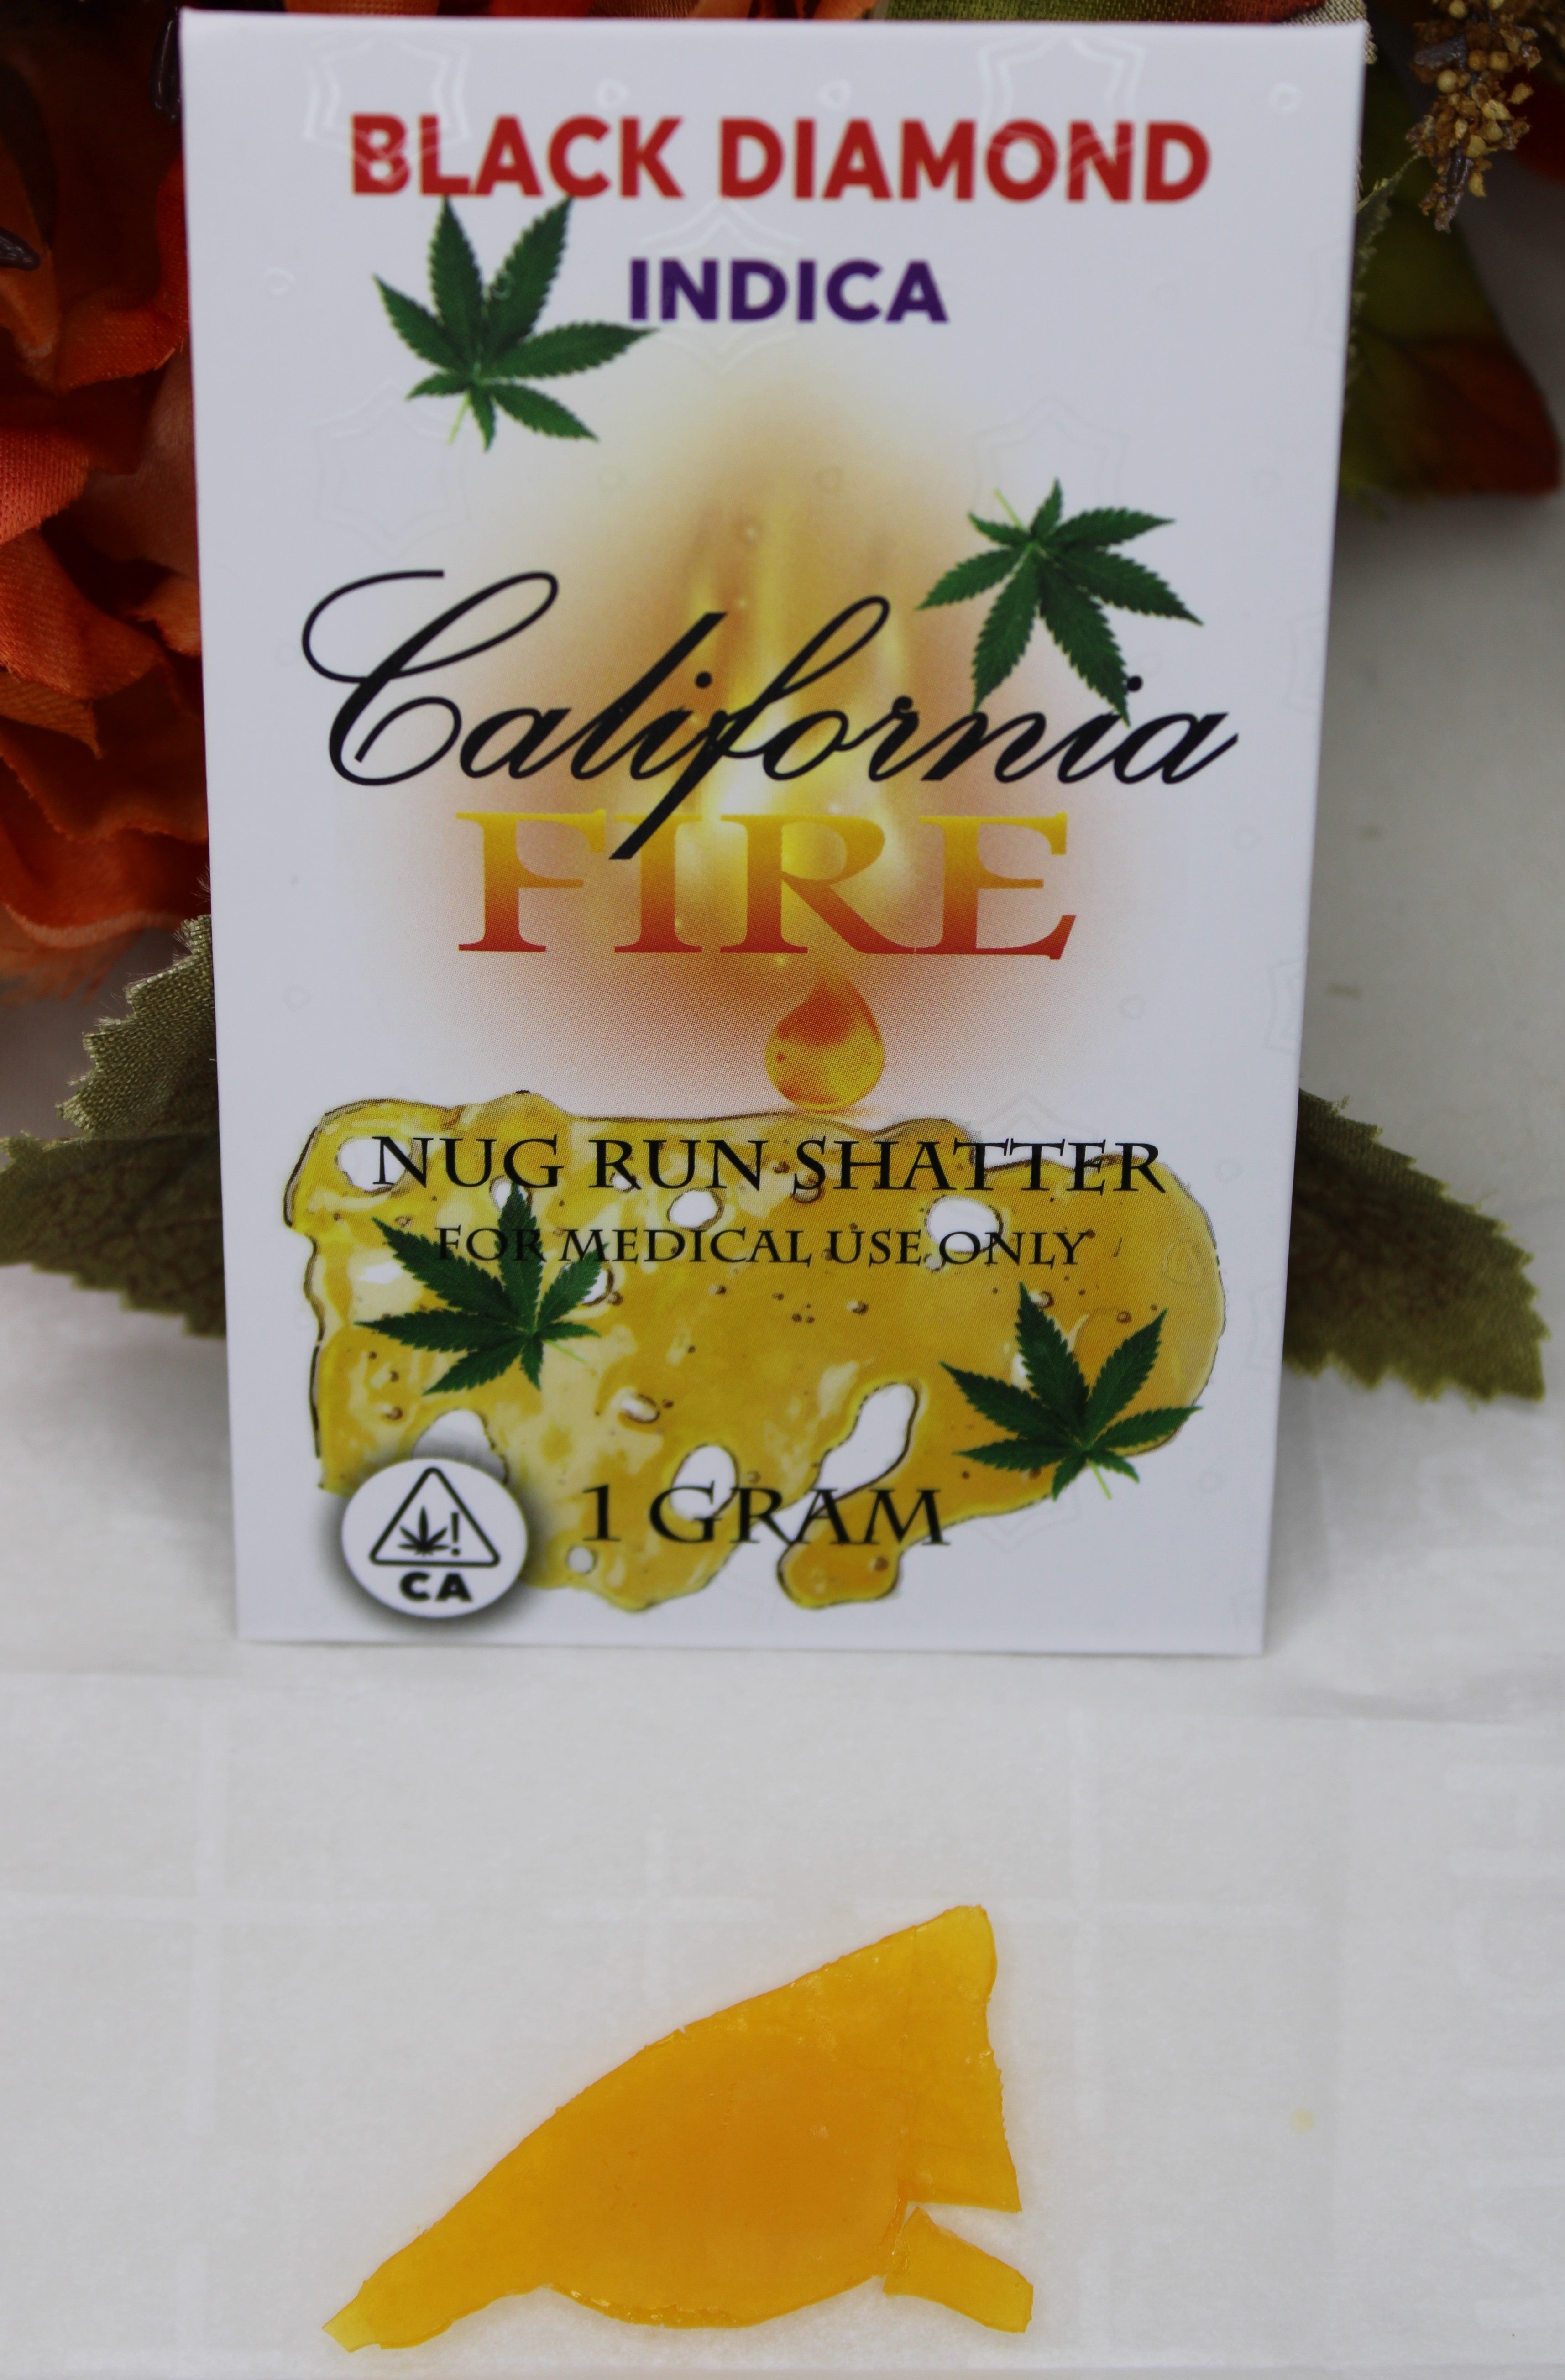 Copy of California Fire Nug Run Shatter "Black Diamond" (1g)